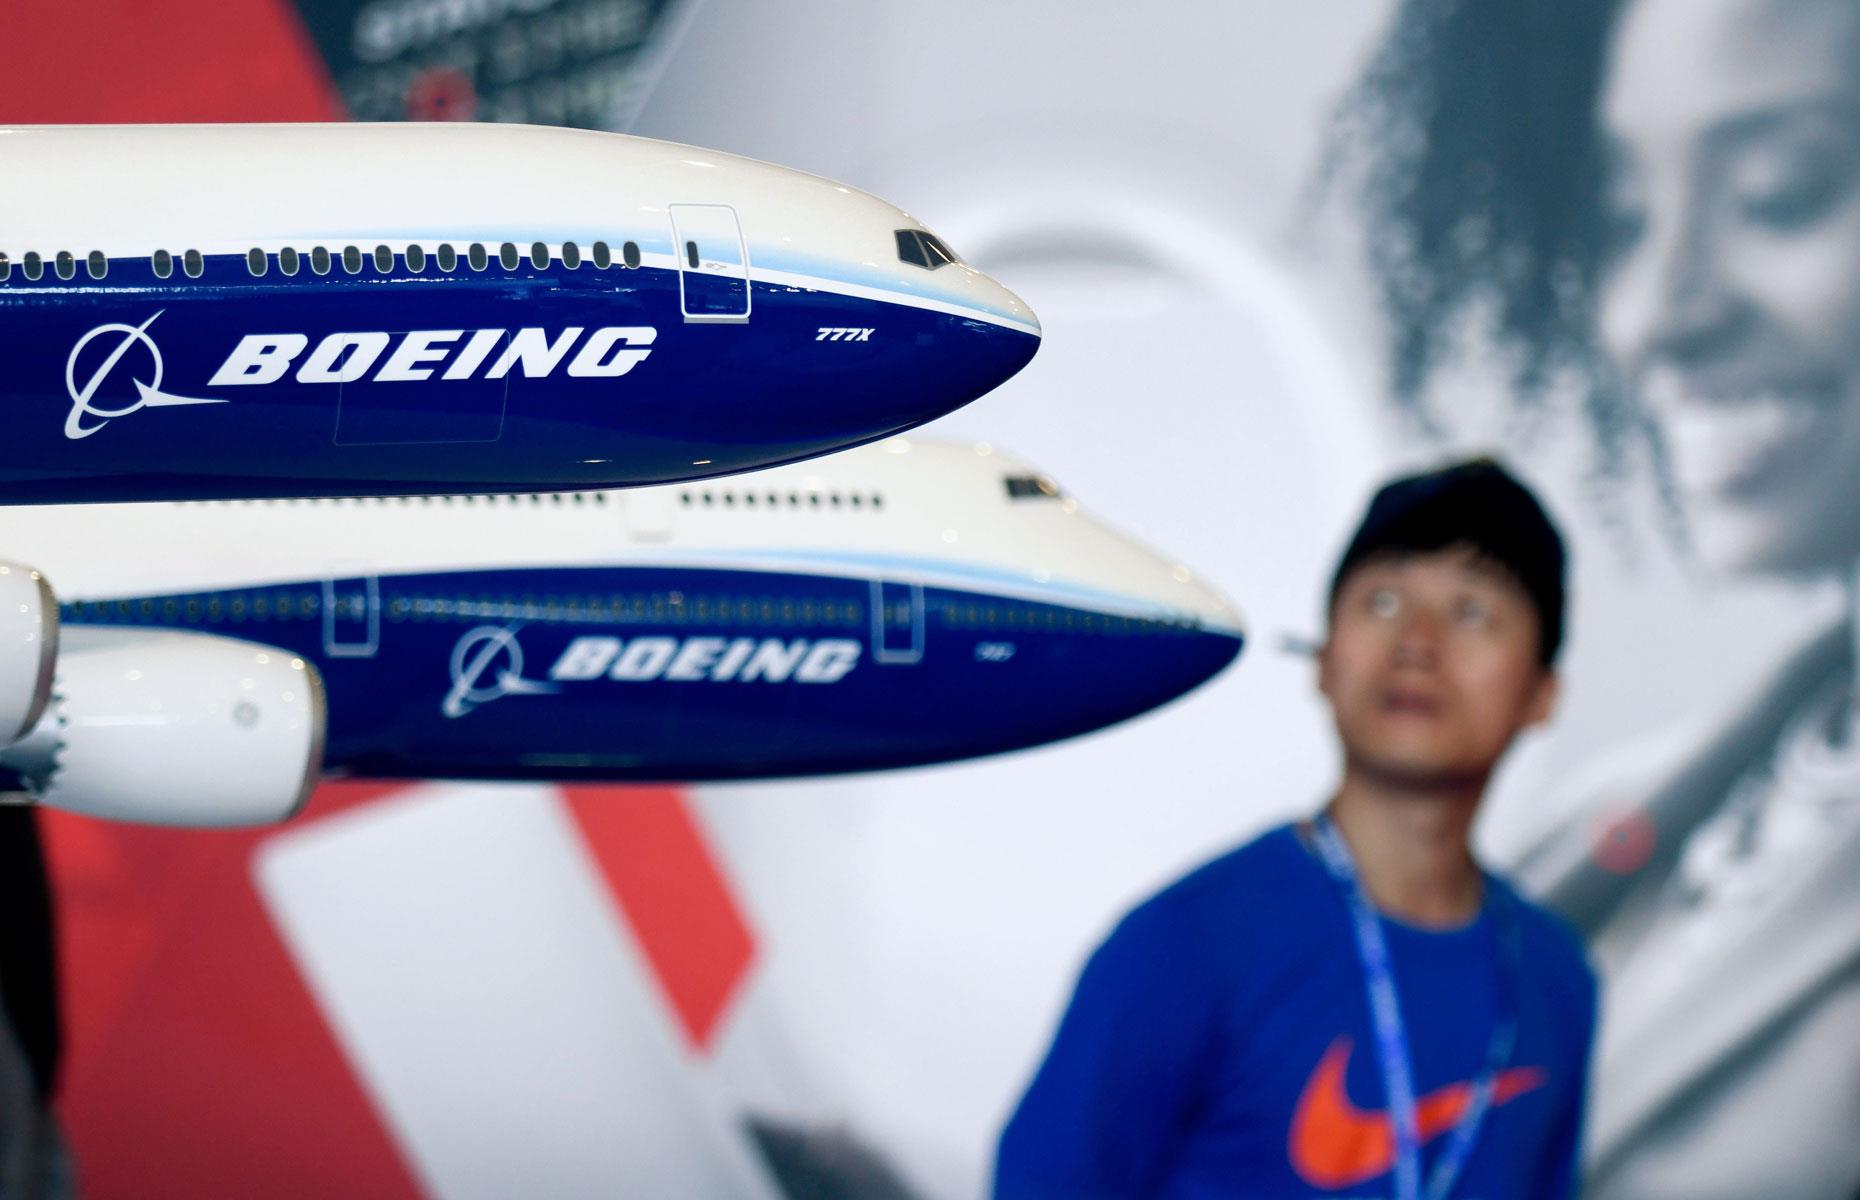 Boeing, share price change: +24%